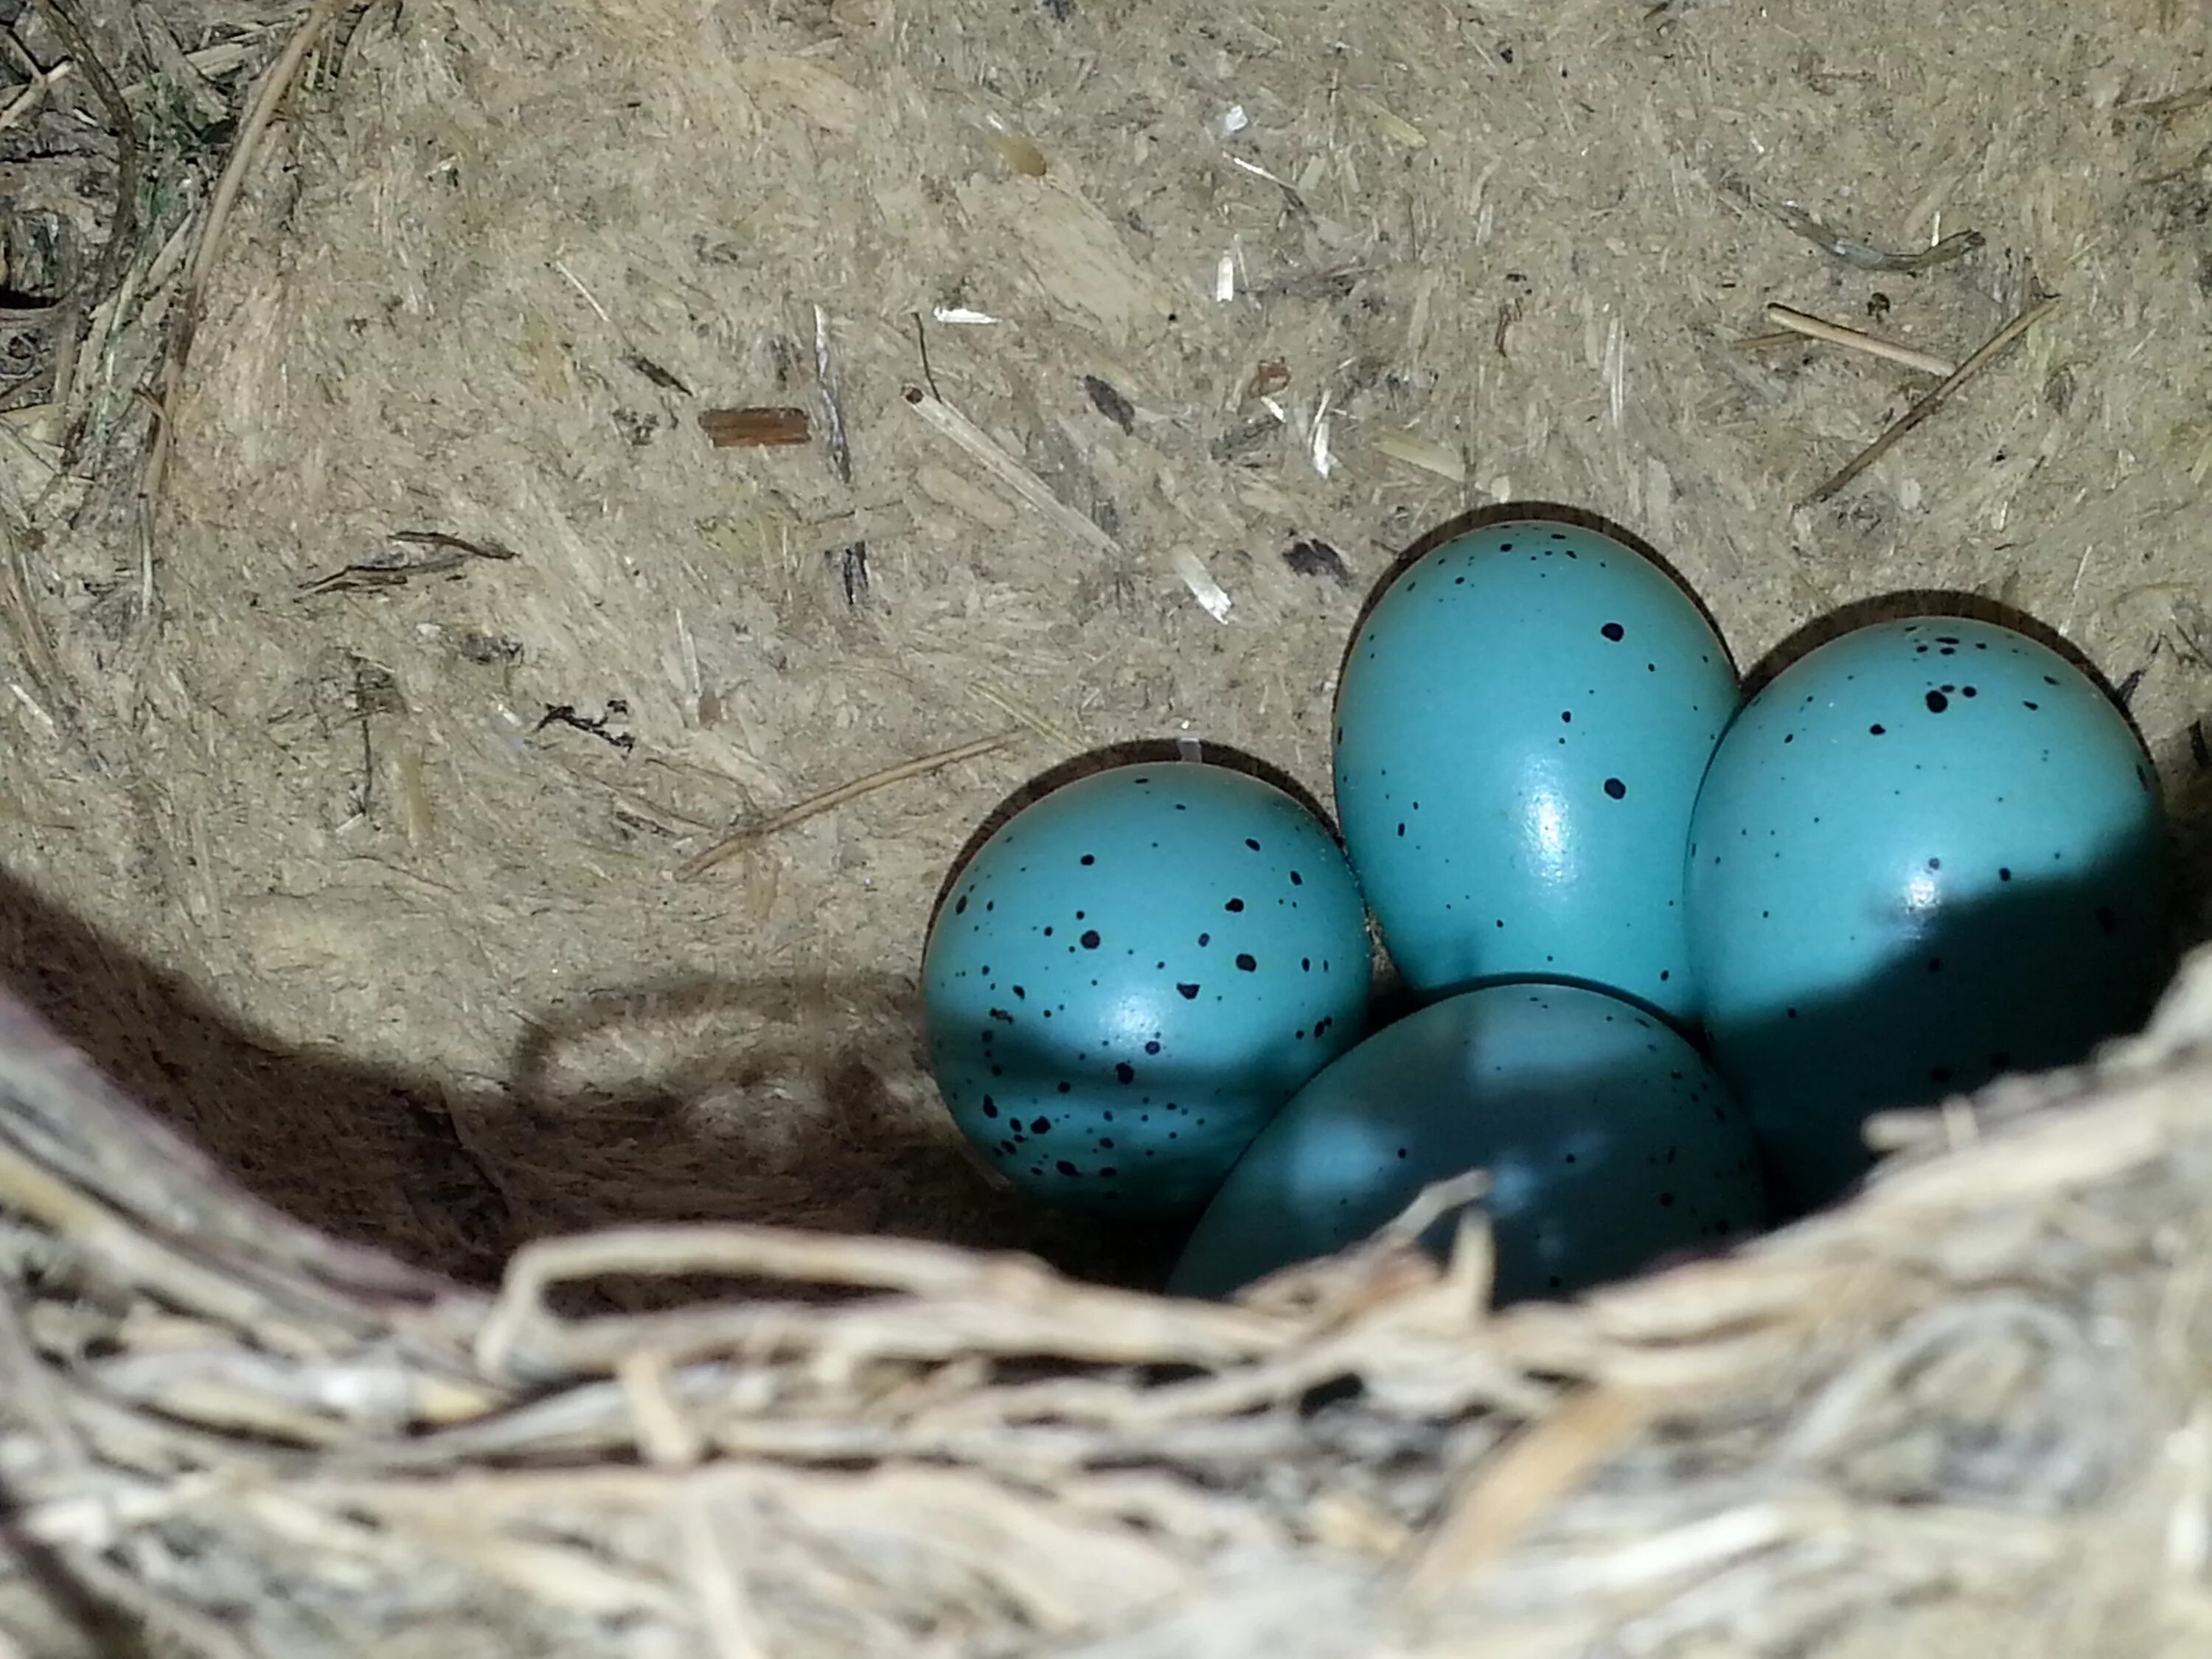 Яйца птиц. Голубые яйца. Необычные яйца птиц. Яйца воробья. Bird яйца